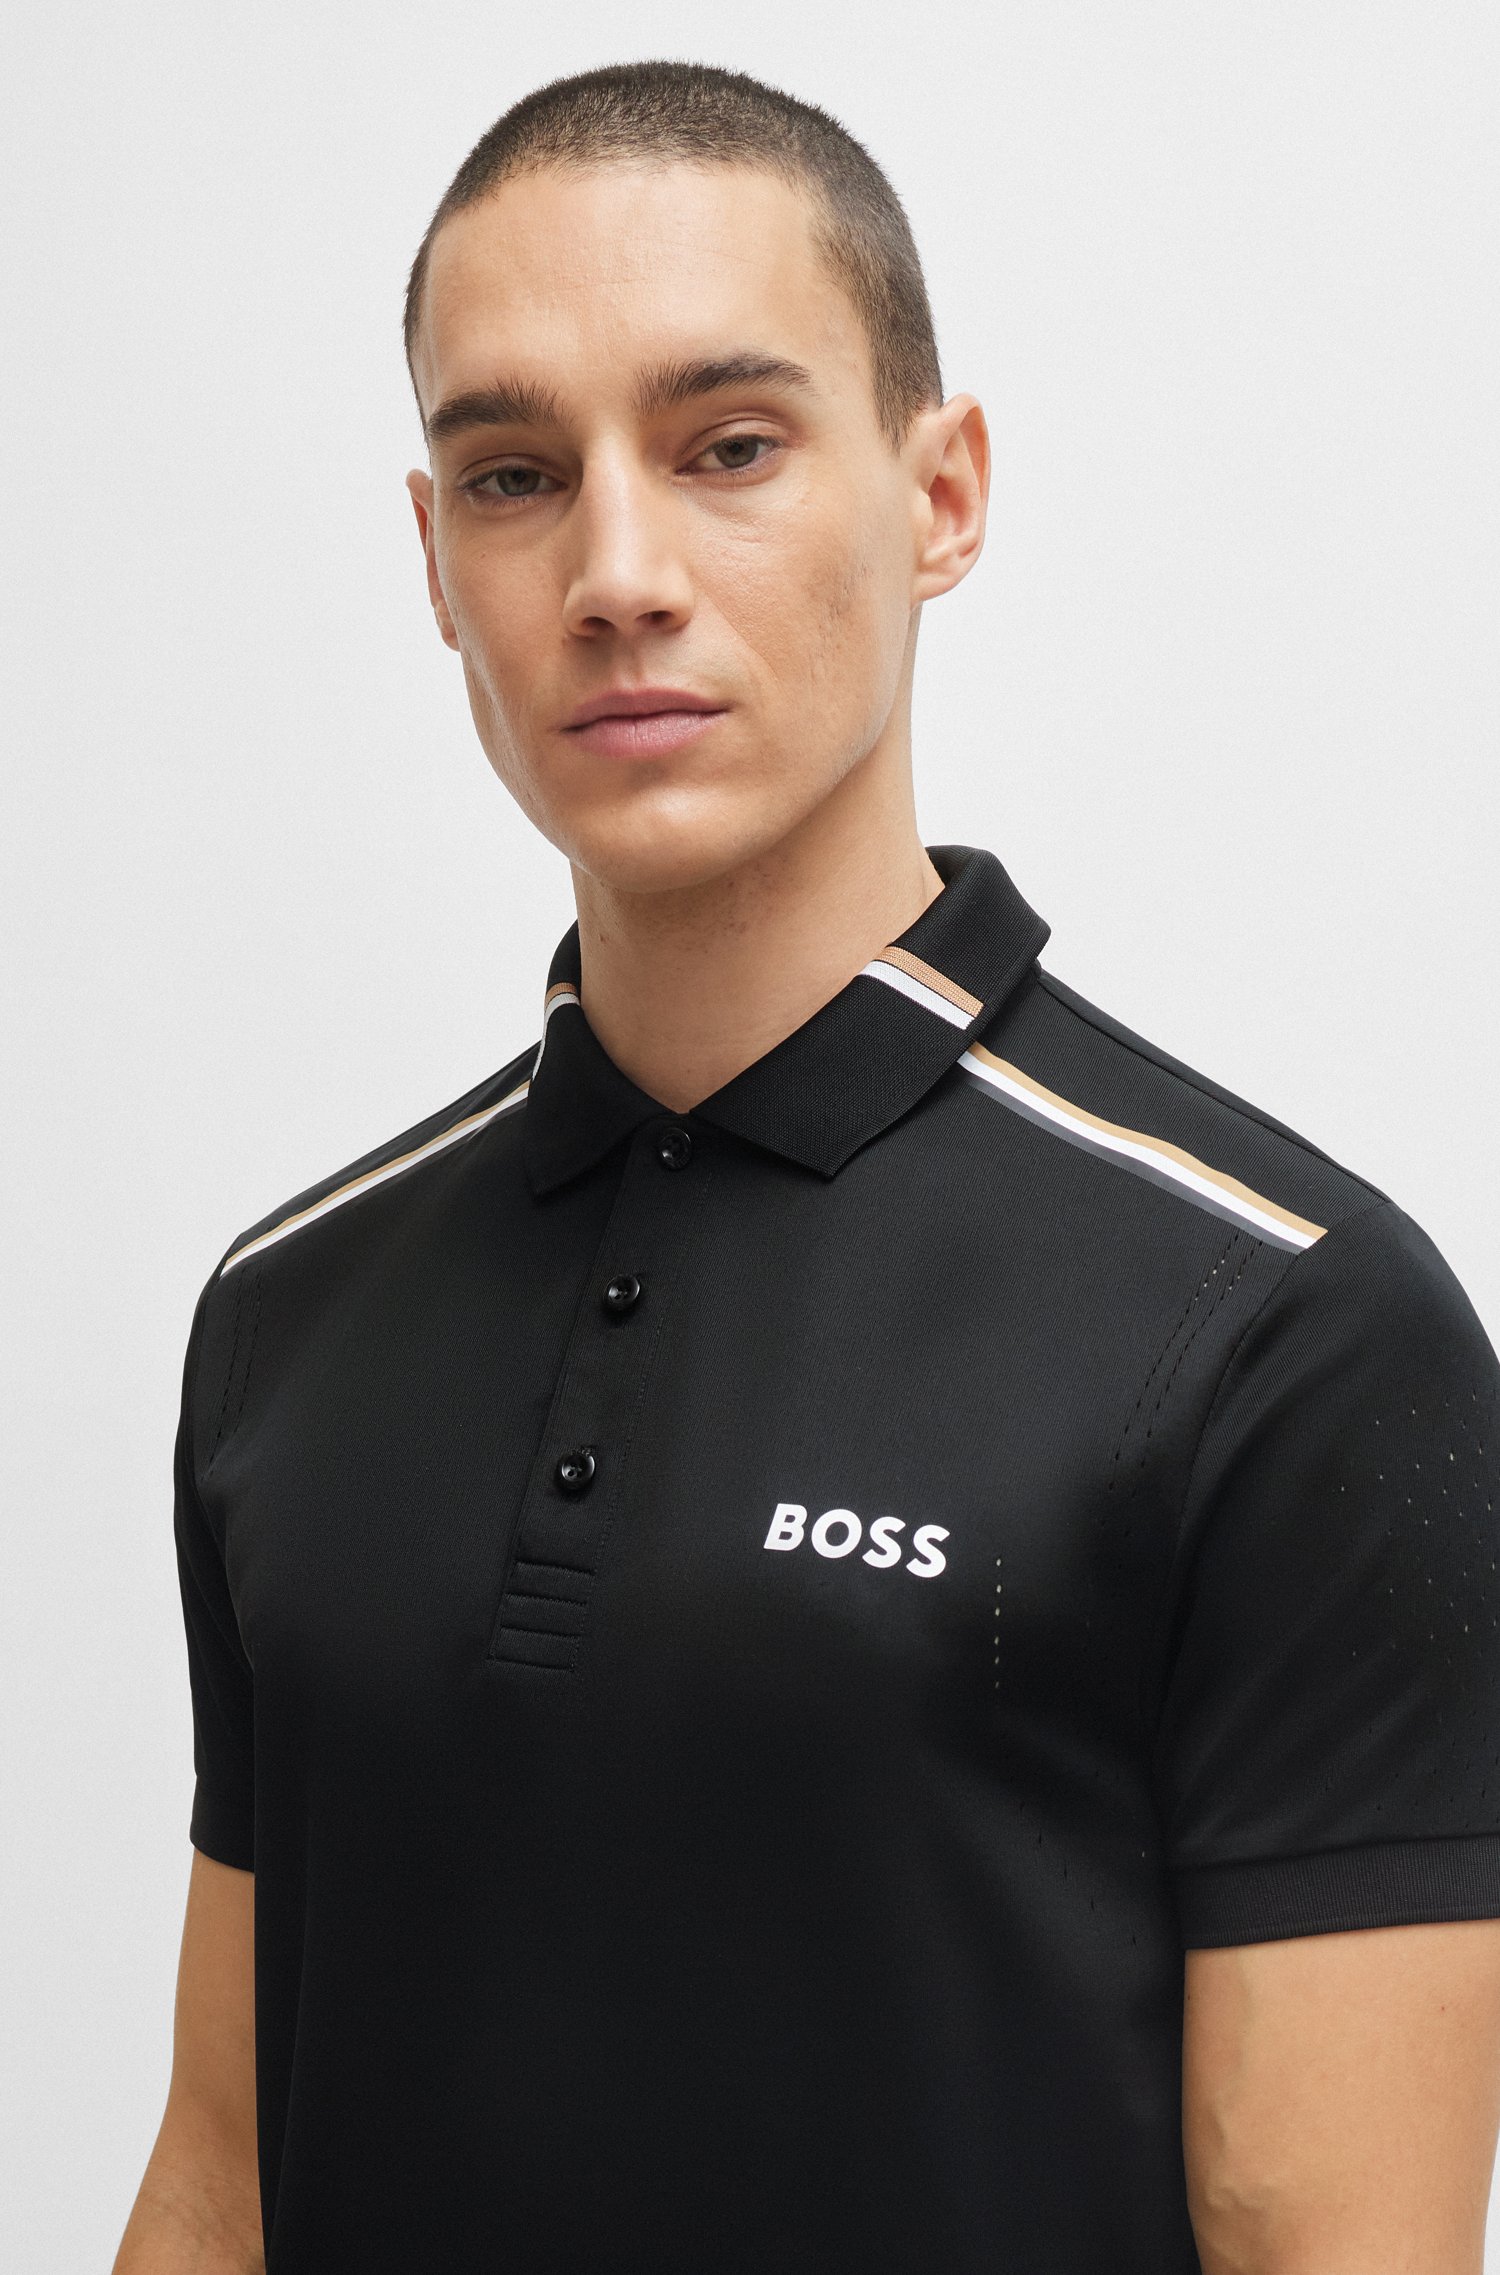 BOSS x Matteo Berrettini slim-fit polo shirt with signature stripes